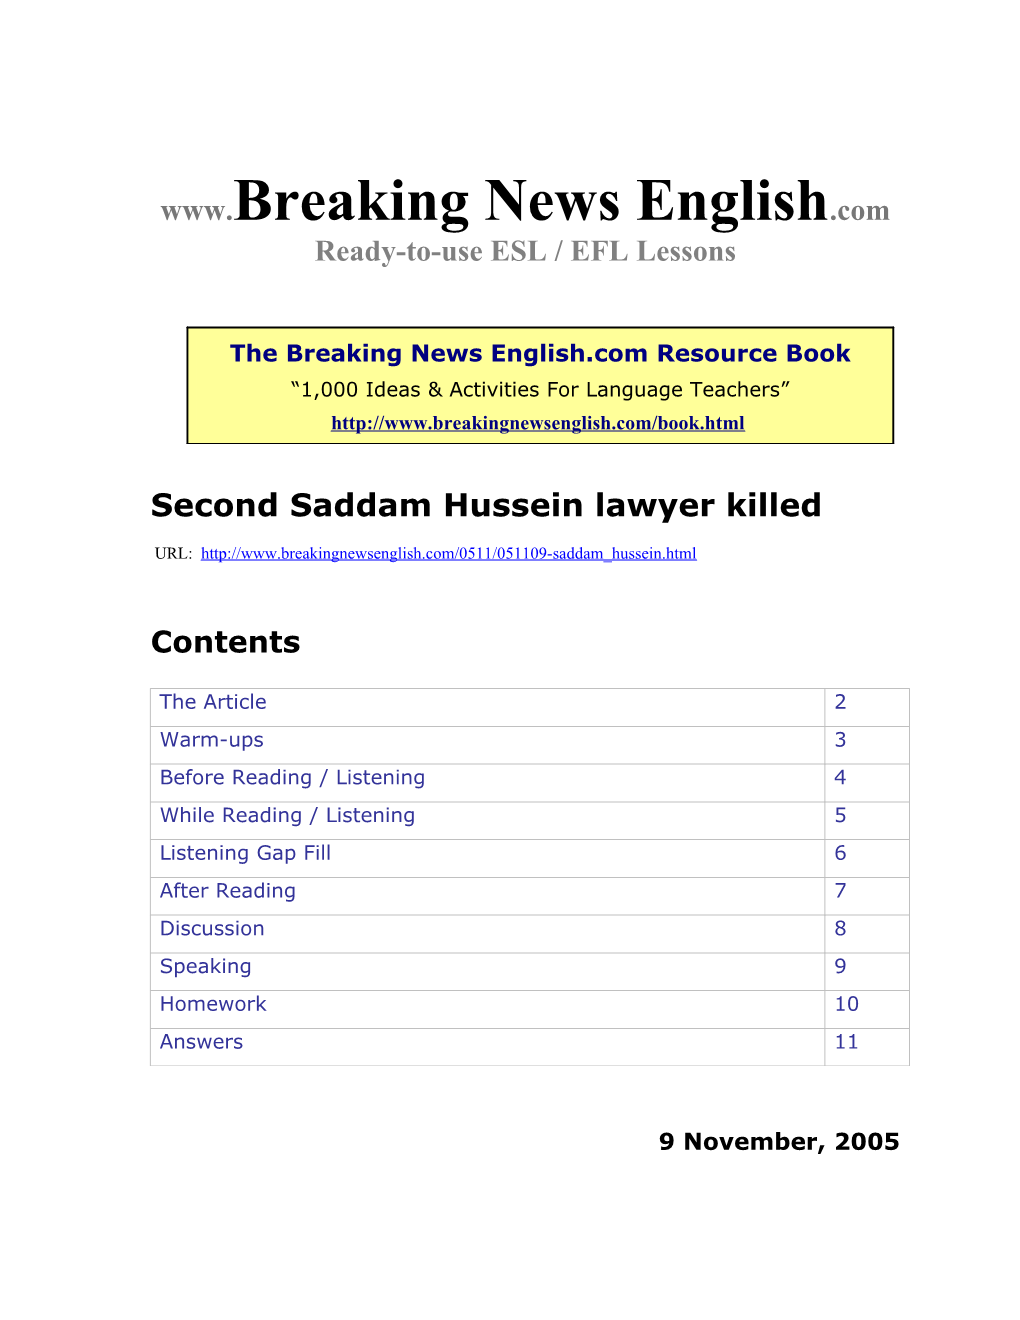 Second Saddam Hussein Lawyer Killed